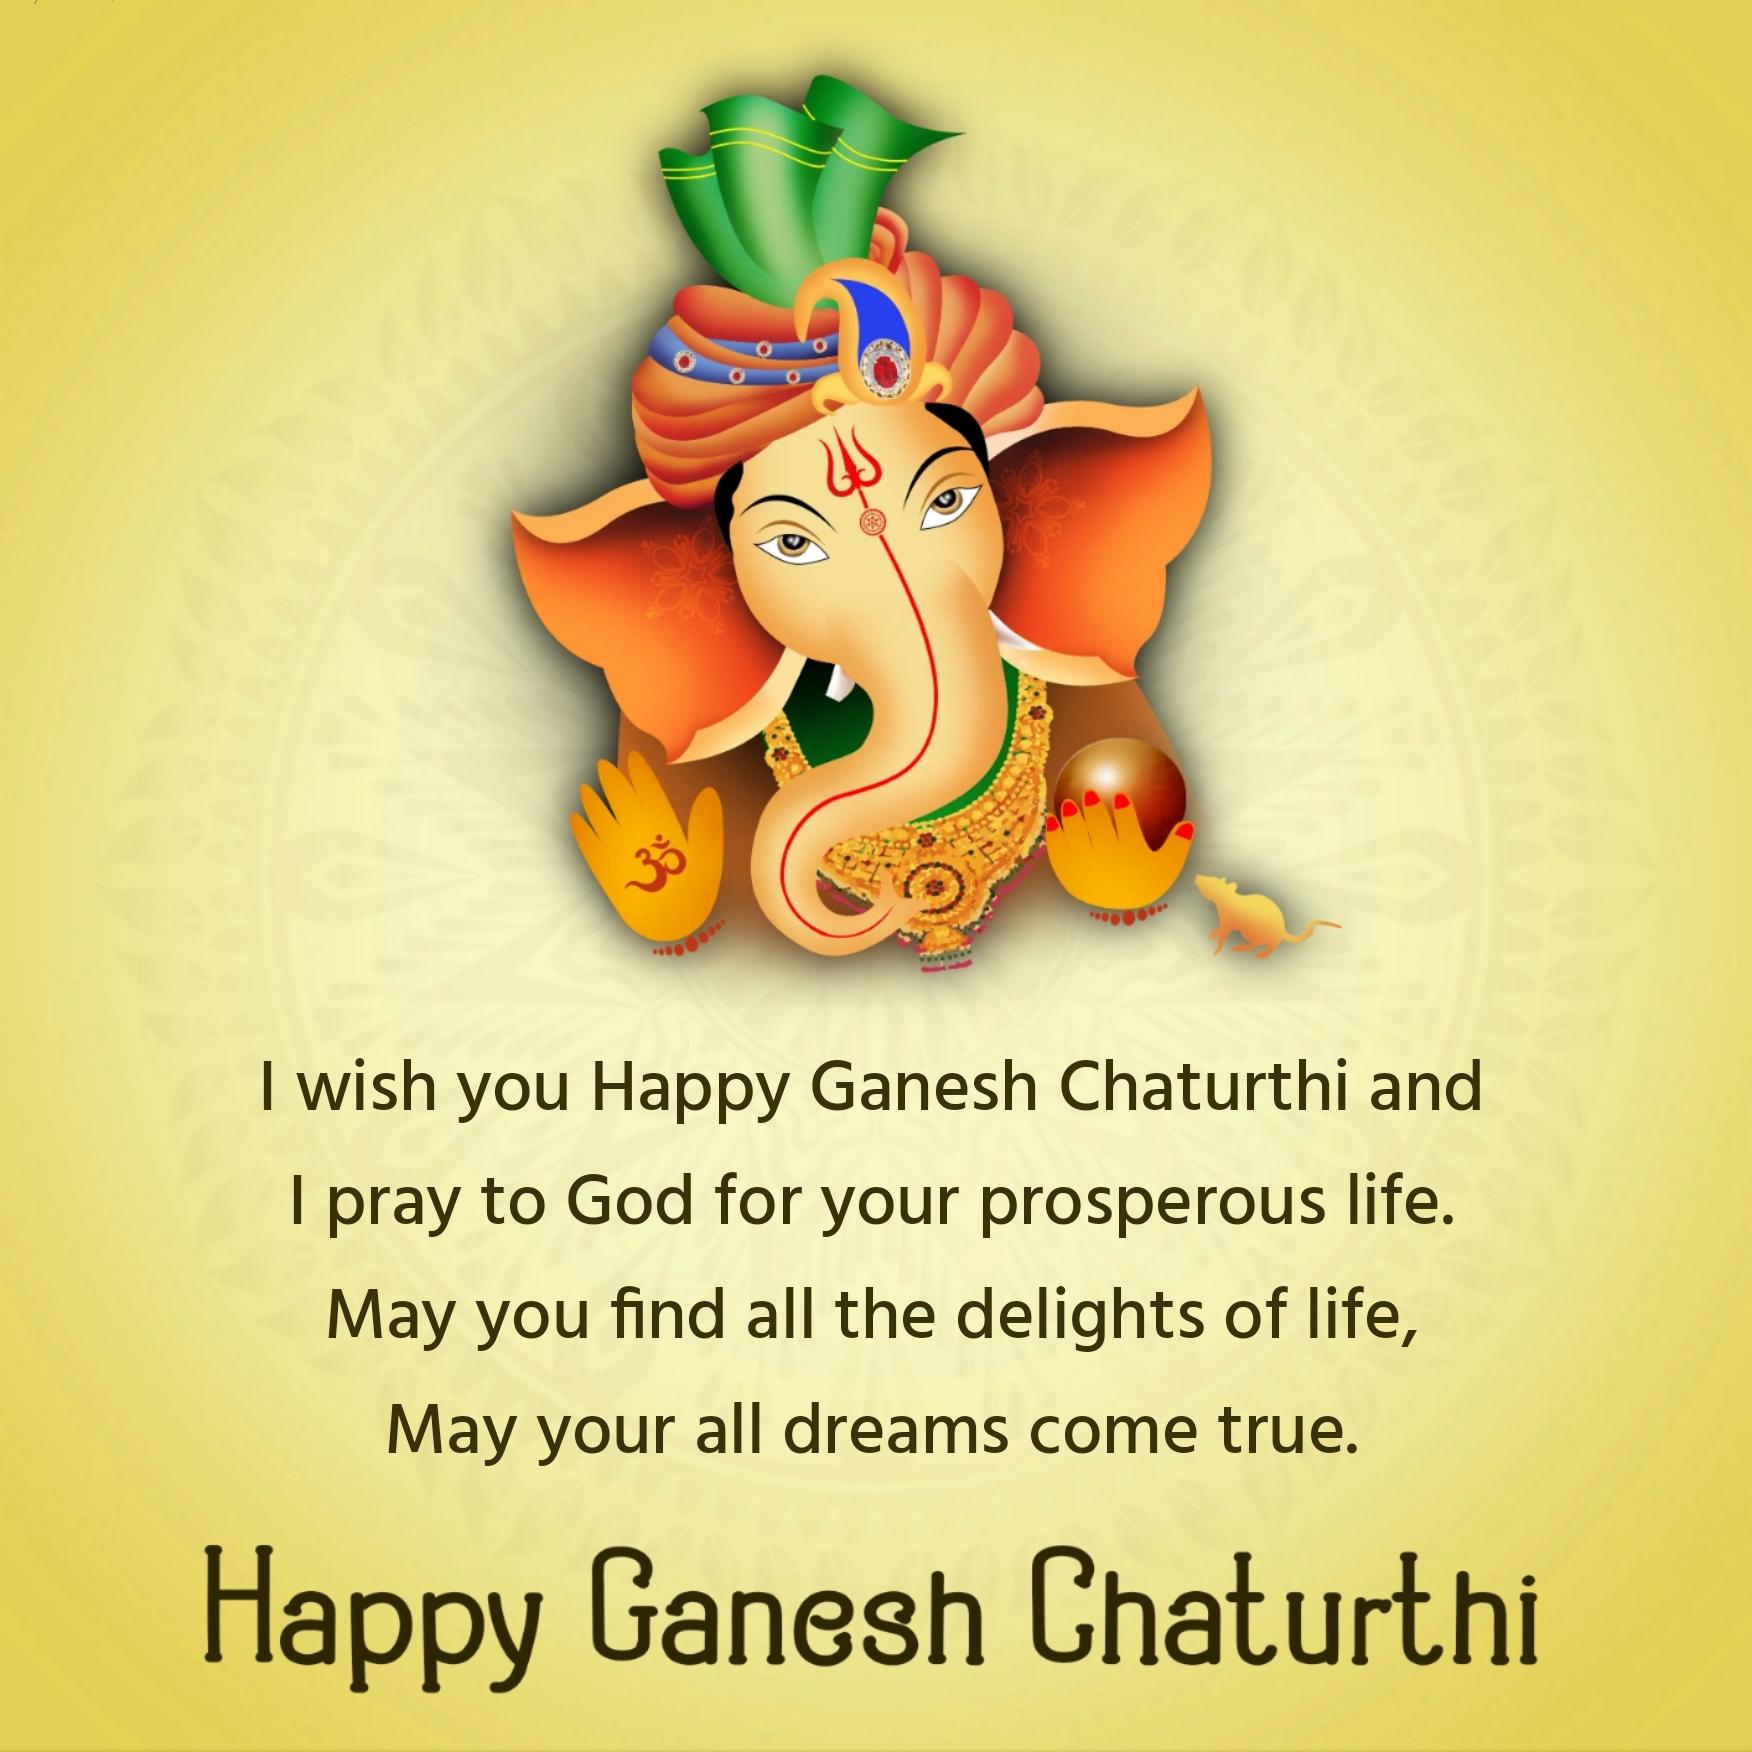 I wish you Happy Ganesh Chaturthi